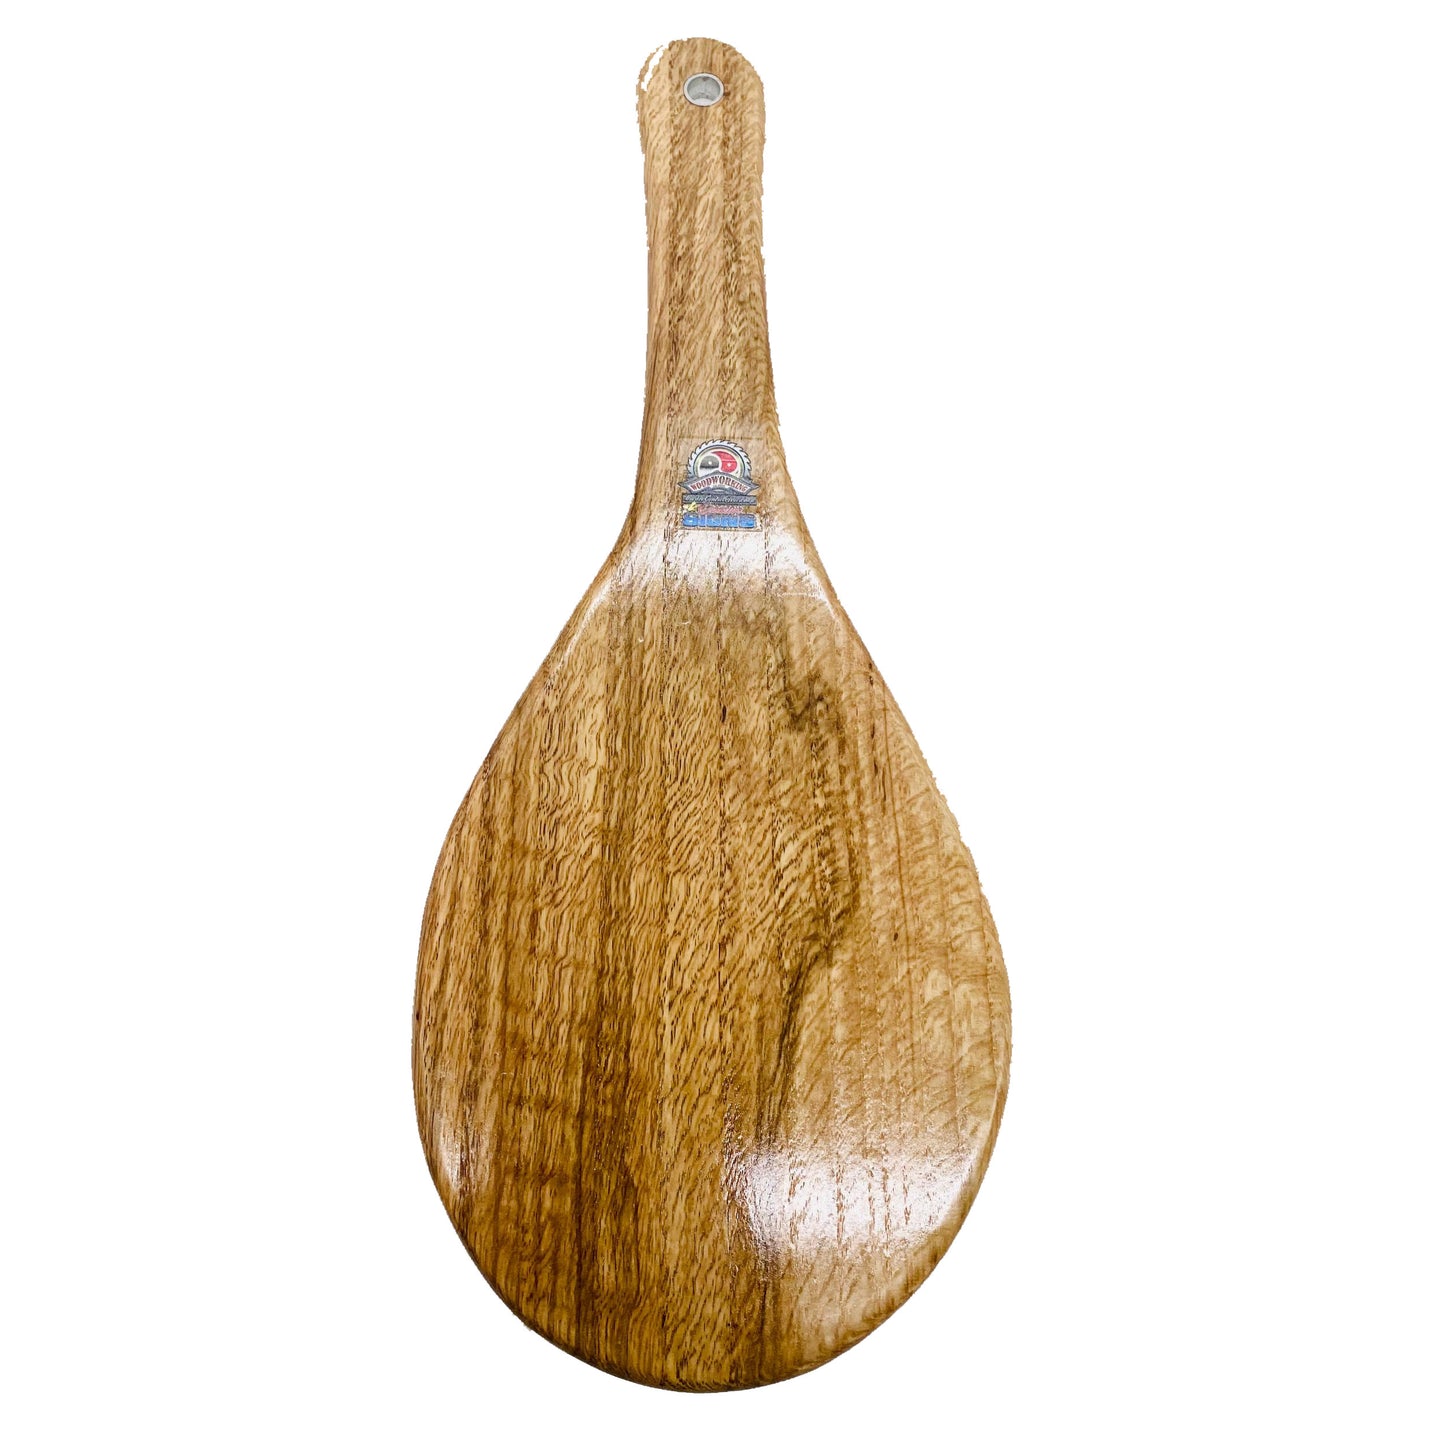 Large Hardwood Jokari Spanking Paddle, hardwood paddle, wood paddle, paddle, spanking paddle, paddle, bdsm, impact, punishment, discipline